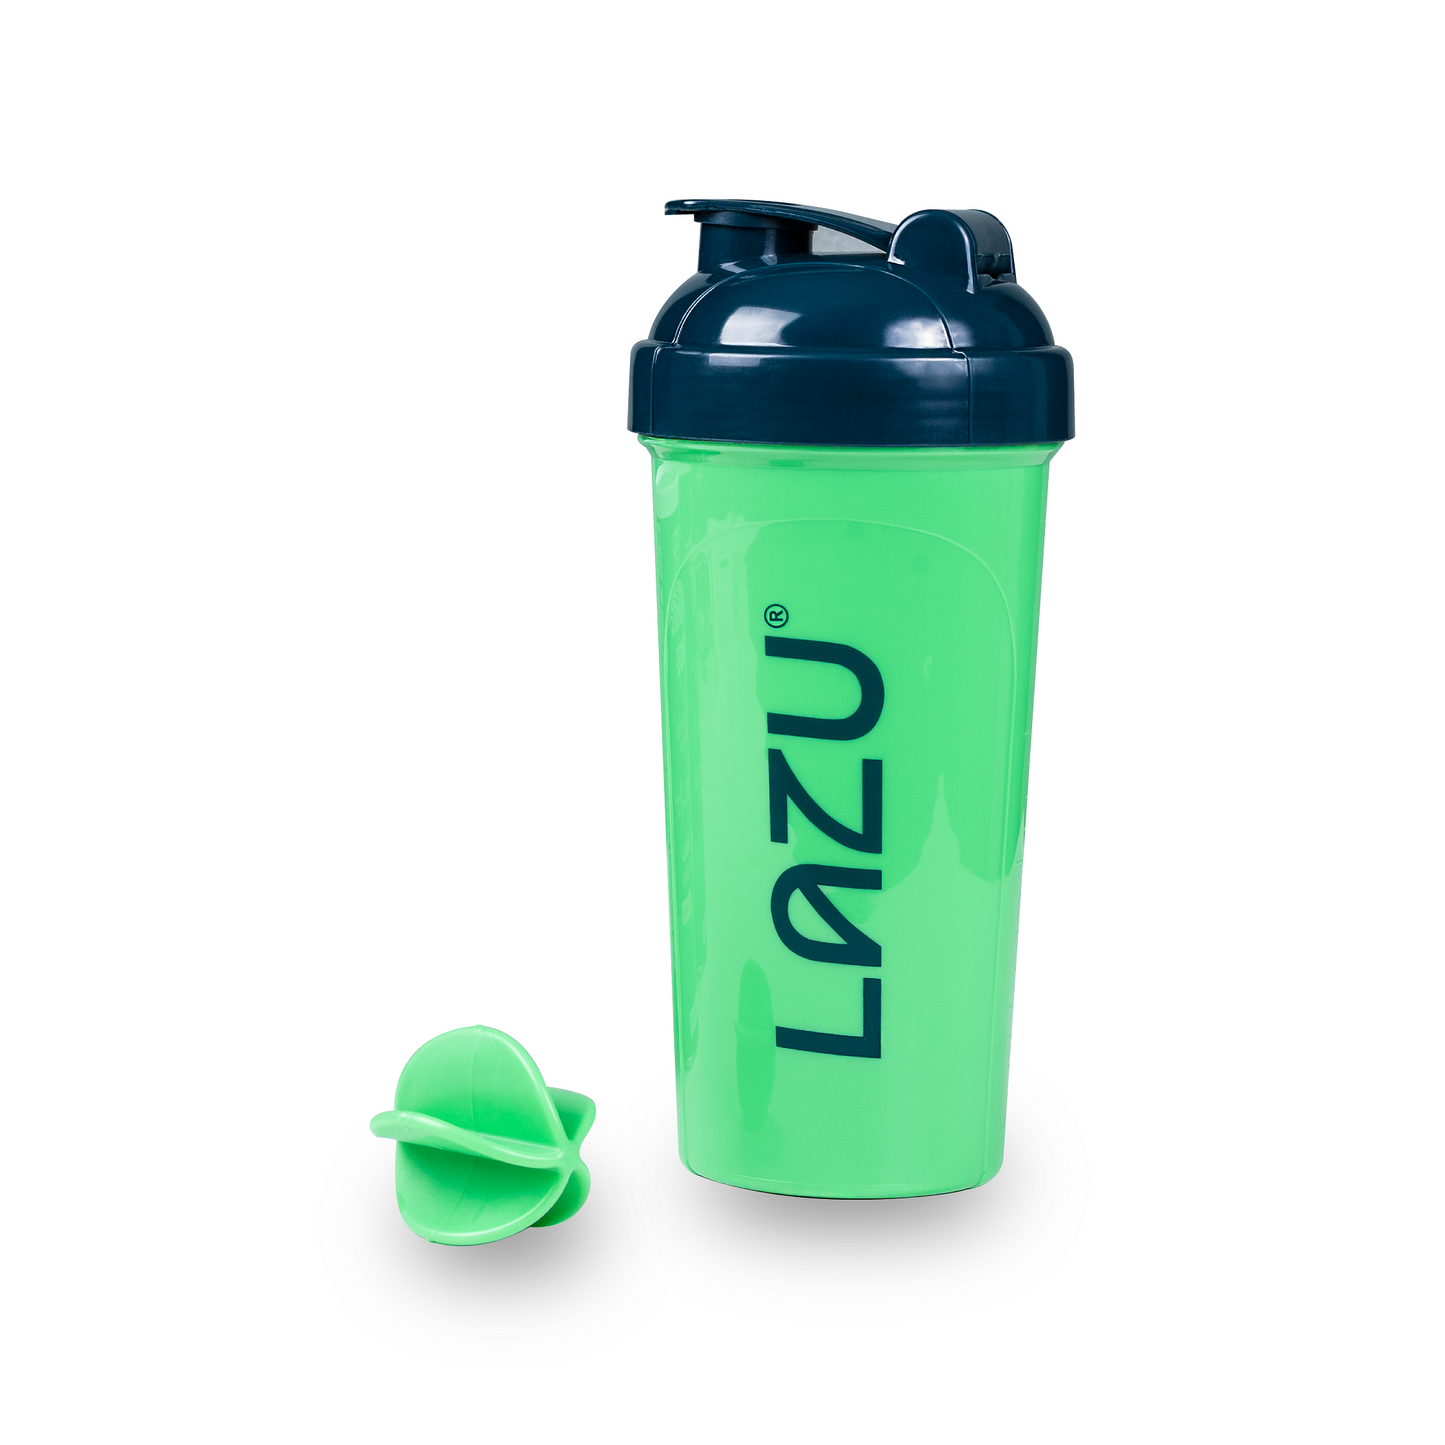 LAZU SHAKER - Shaker bottle for Keto Products